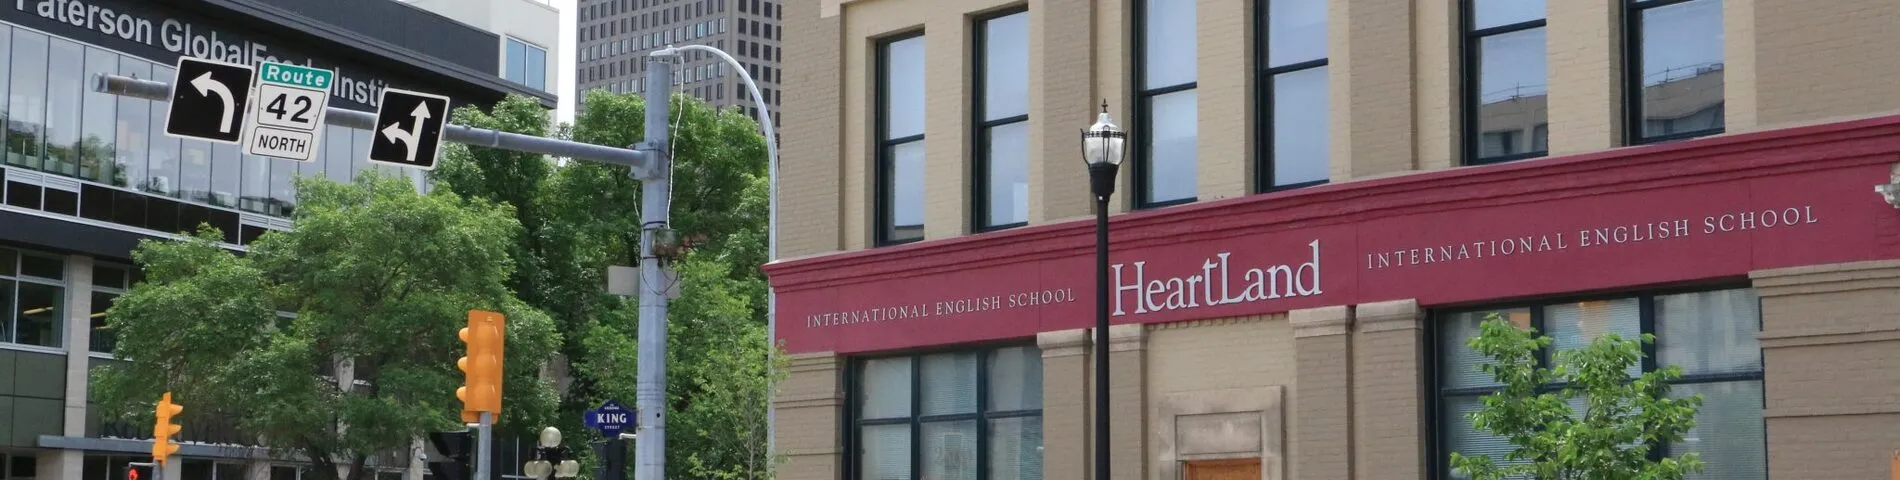 Heartland International English School obrazek 1